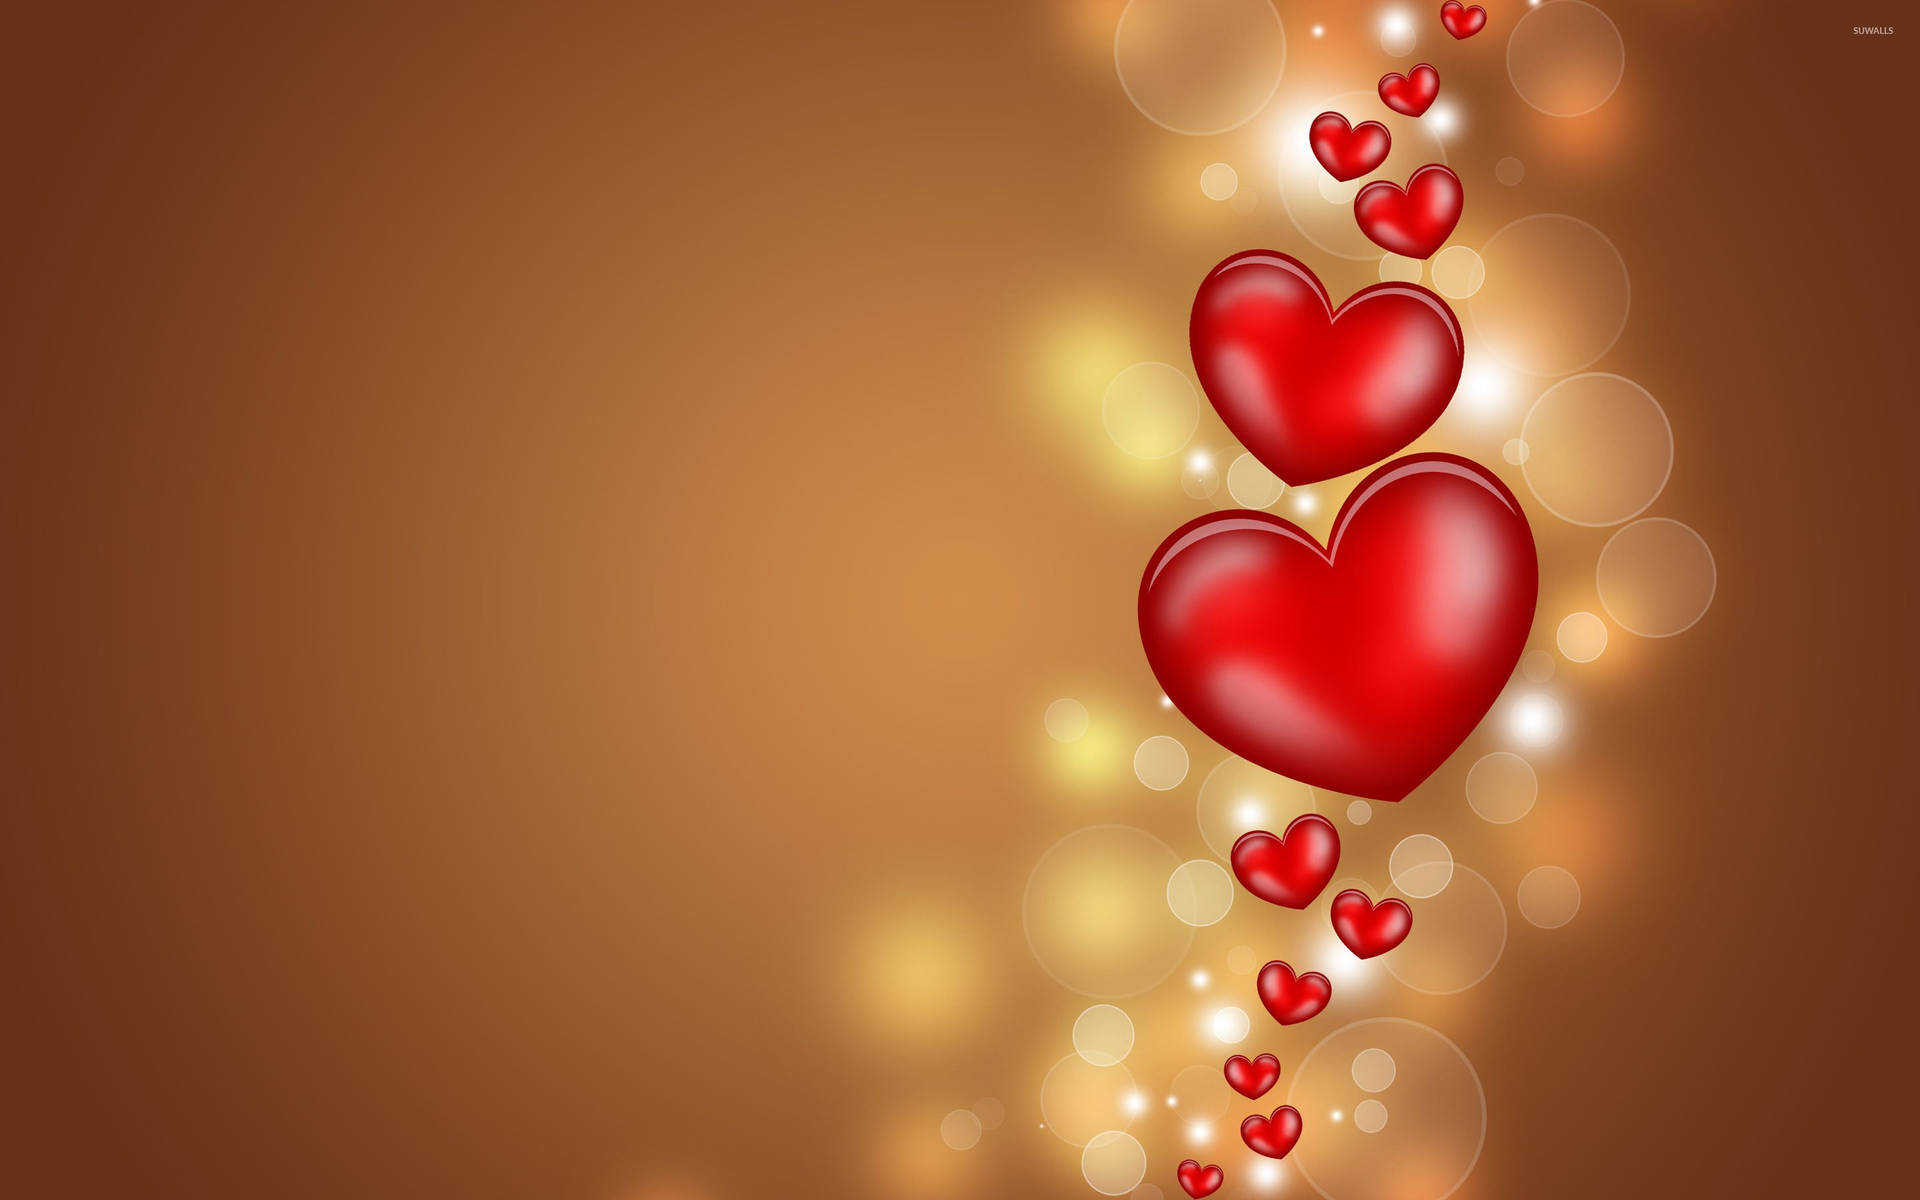 Heart of Love Wallpaper